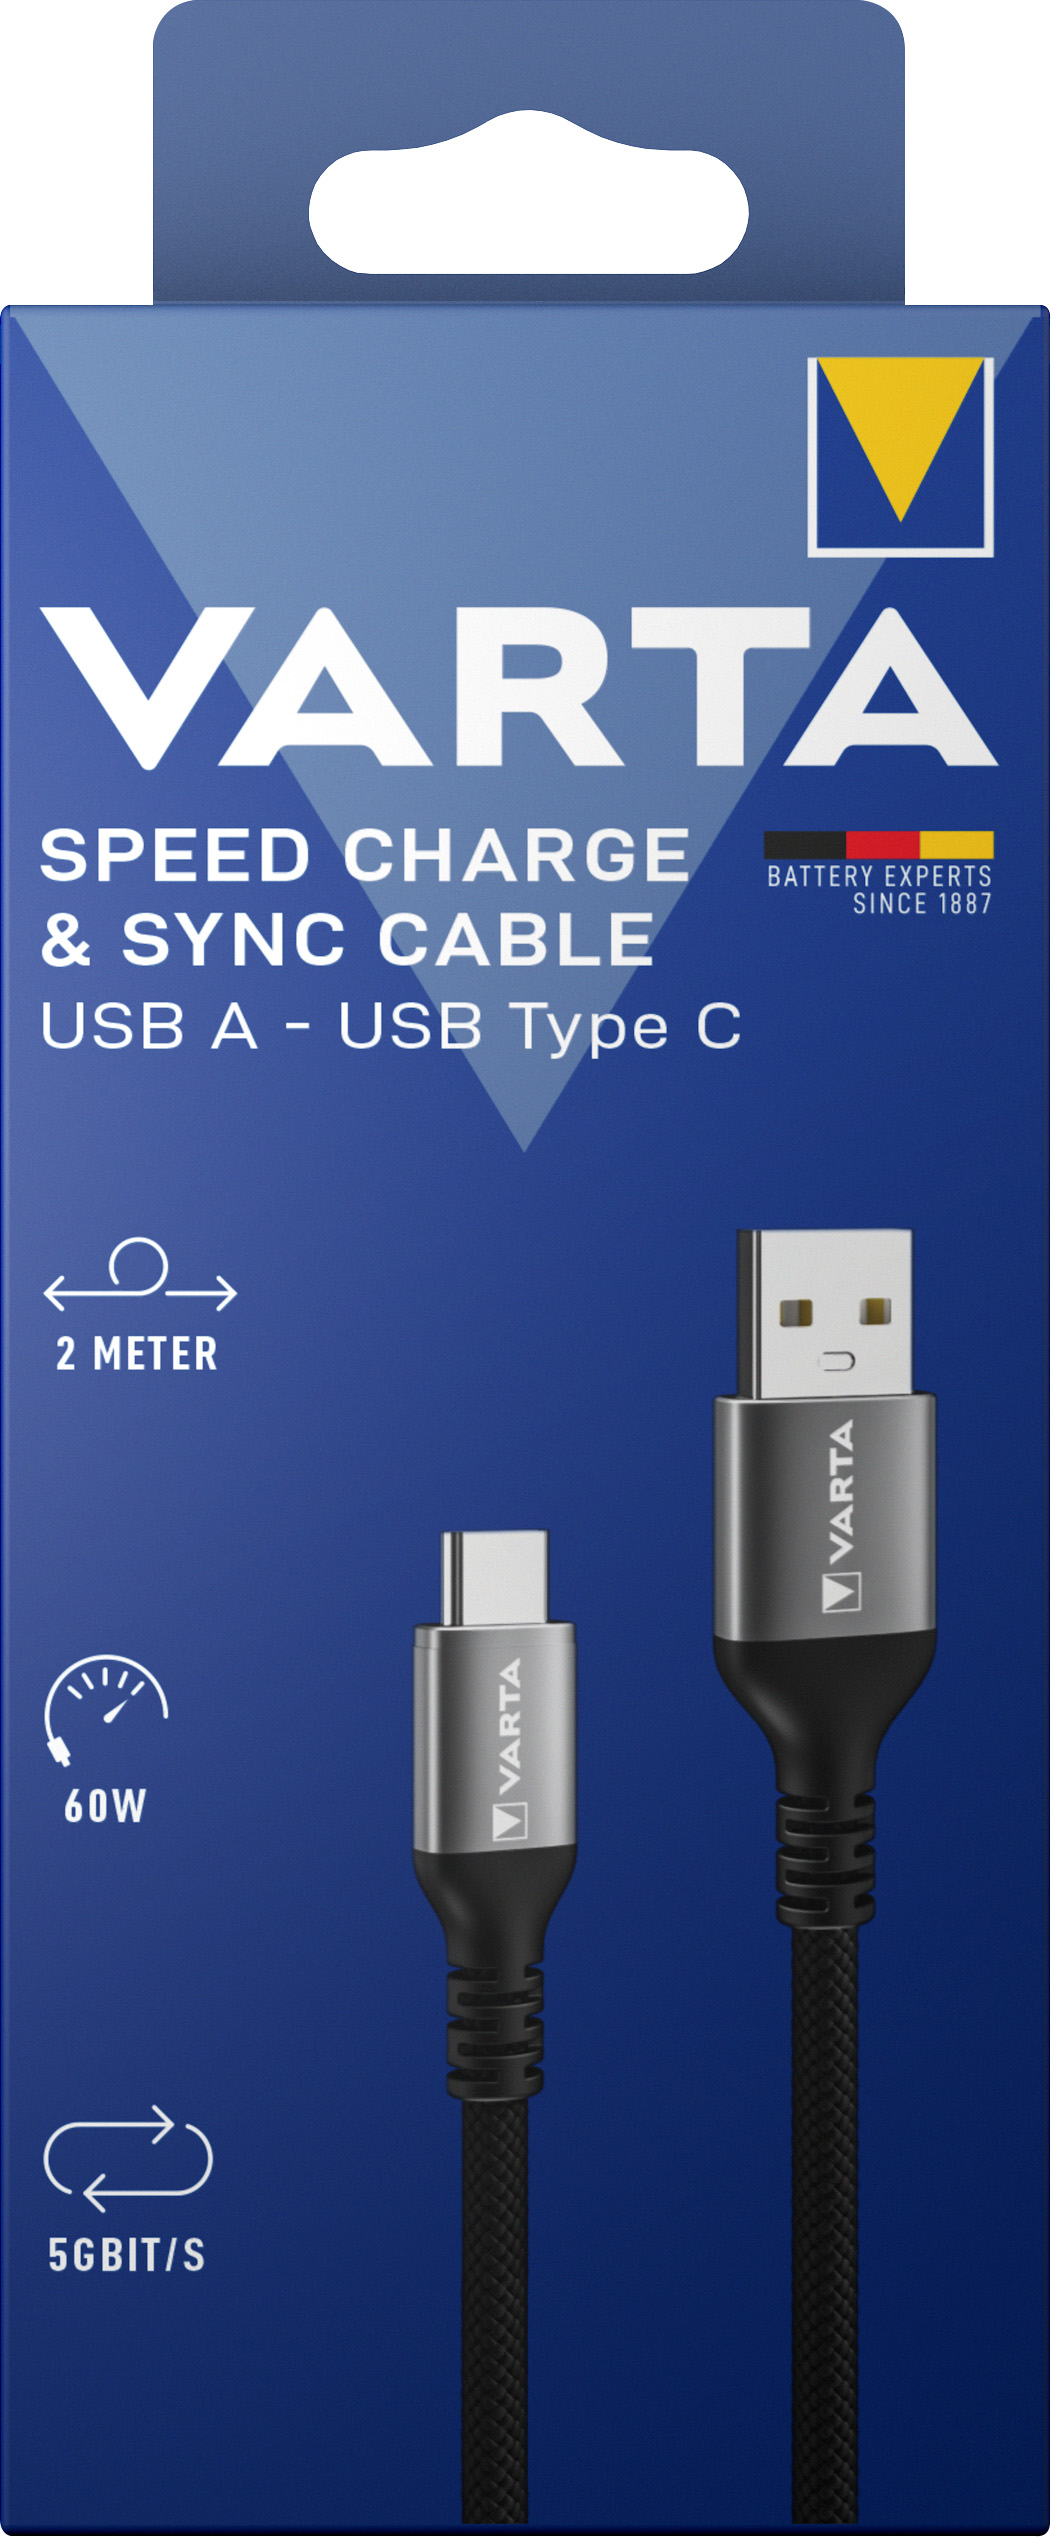 Varta Kabel, USB-A/USB-C, 2.0m 60W, 5Gbit/s, schwarz, Retail-Blister